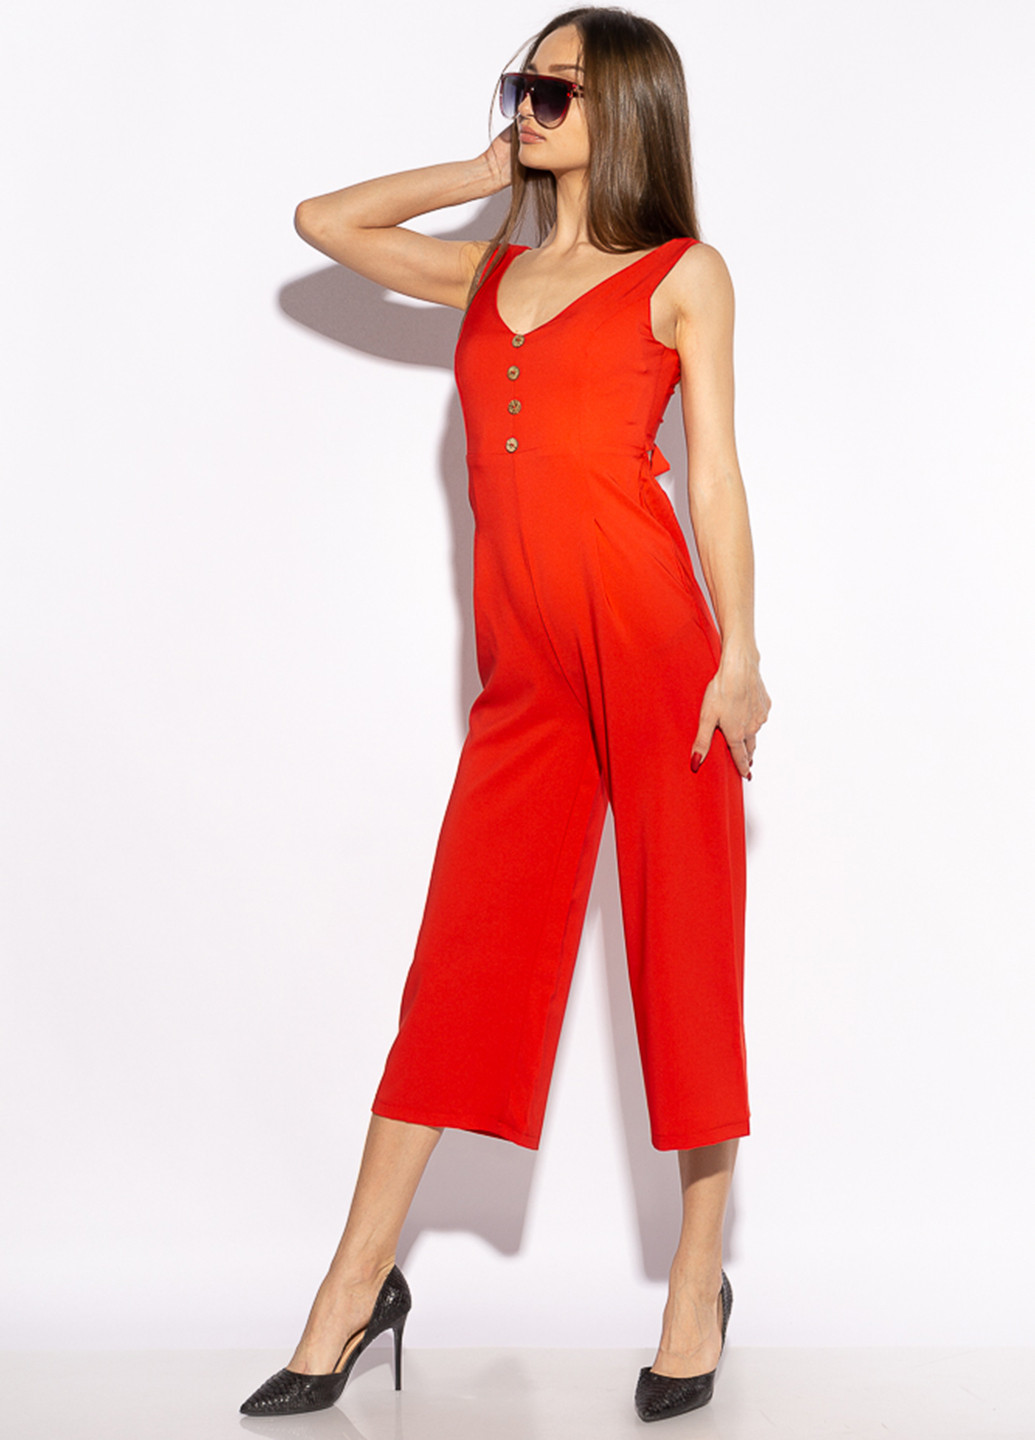 Комбинезон Time of Style комбинезон-брюки однотонный красный кэжуал полиэстер